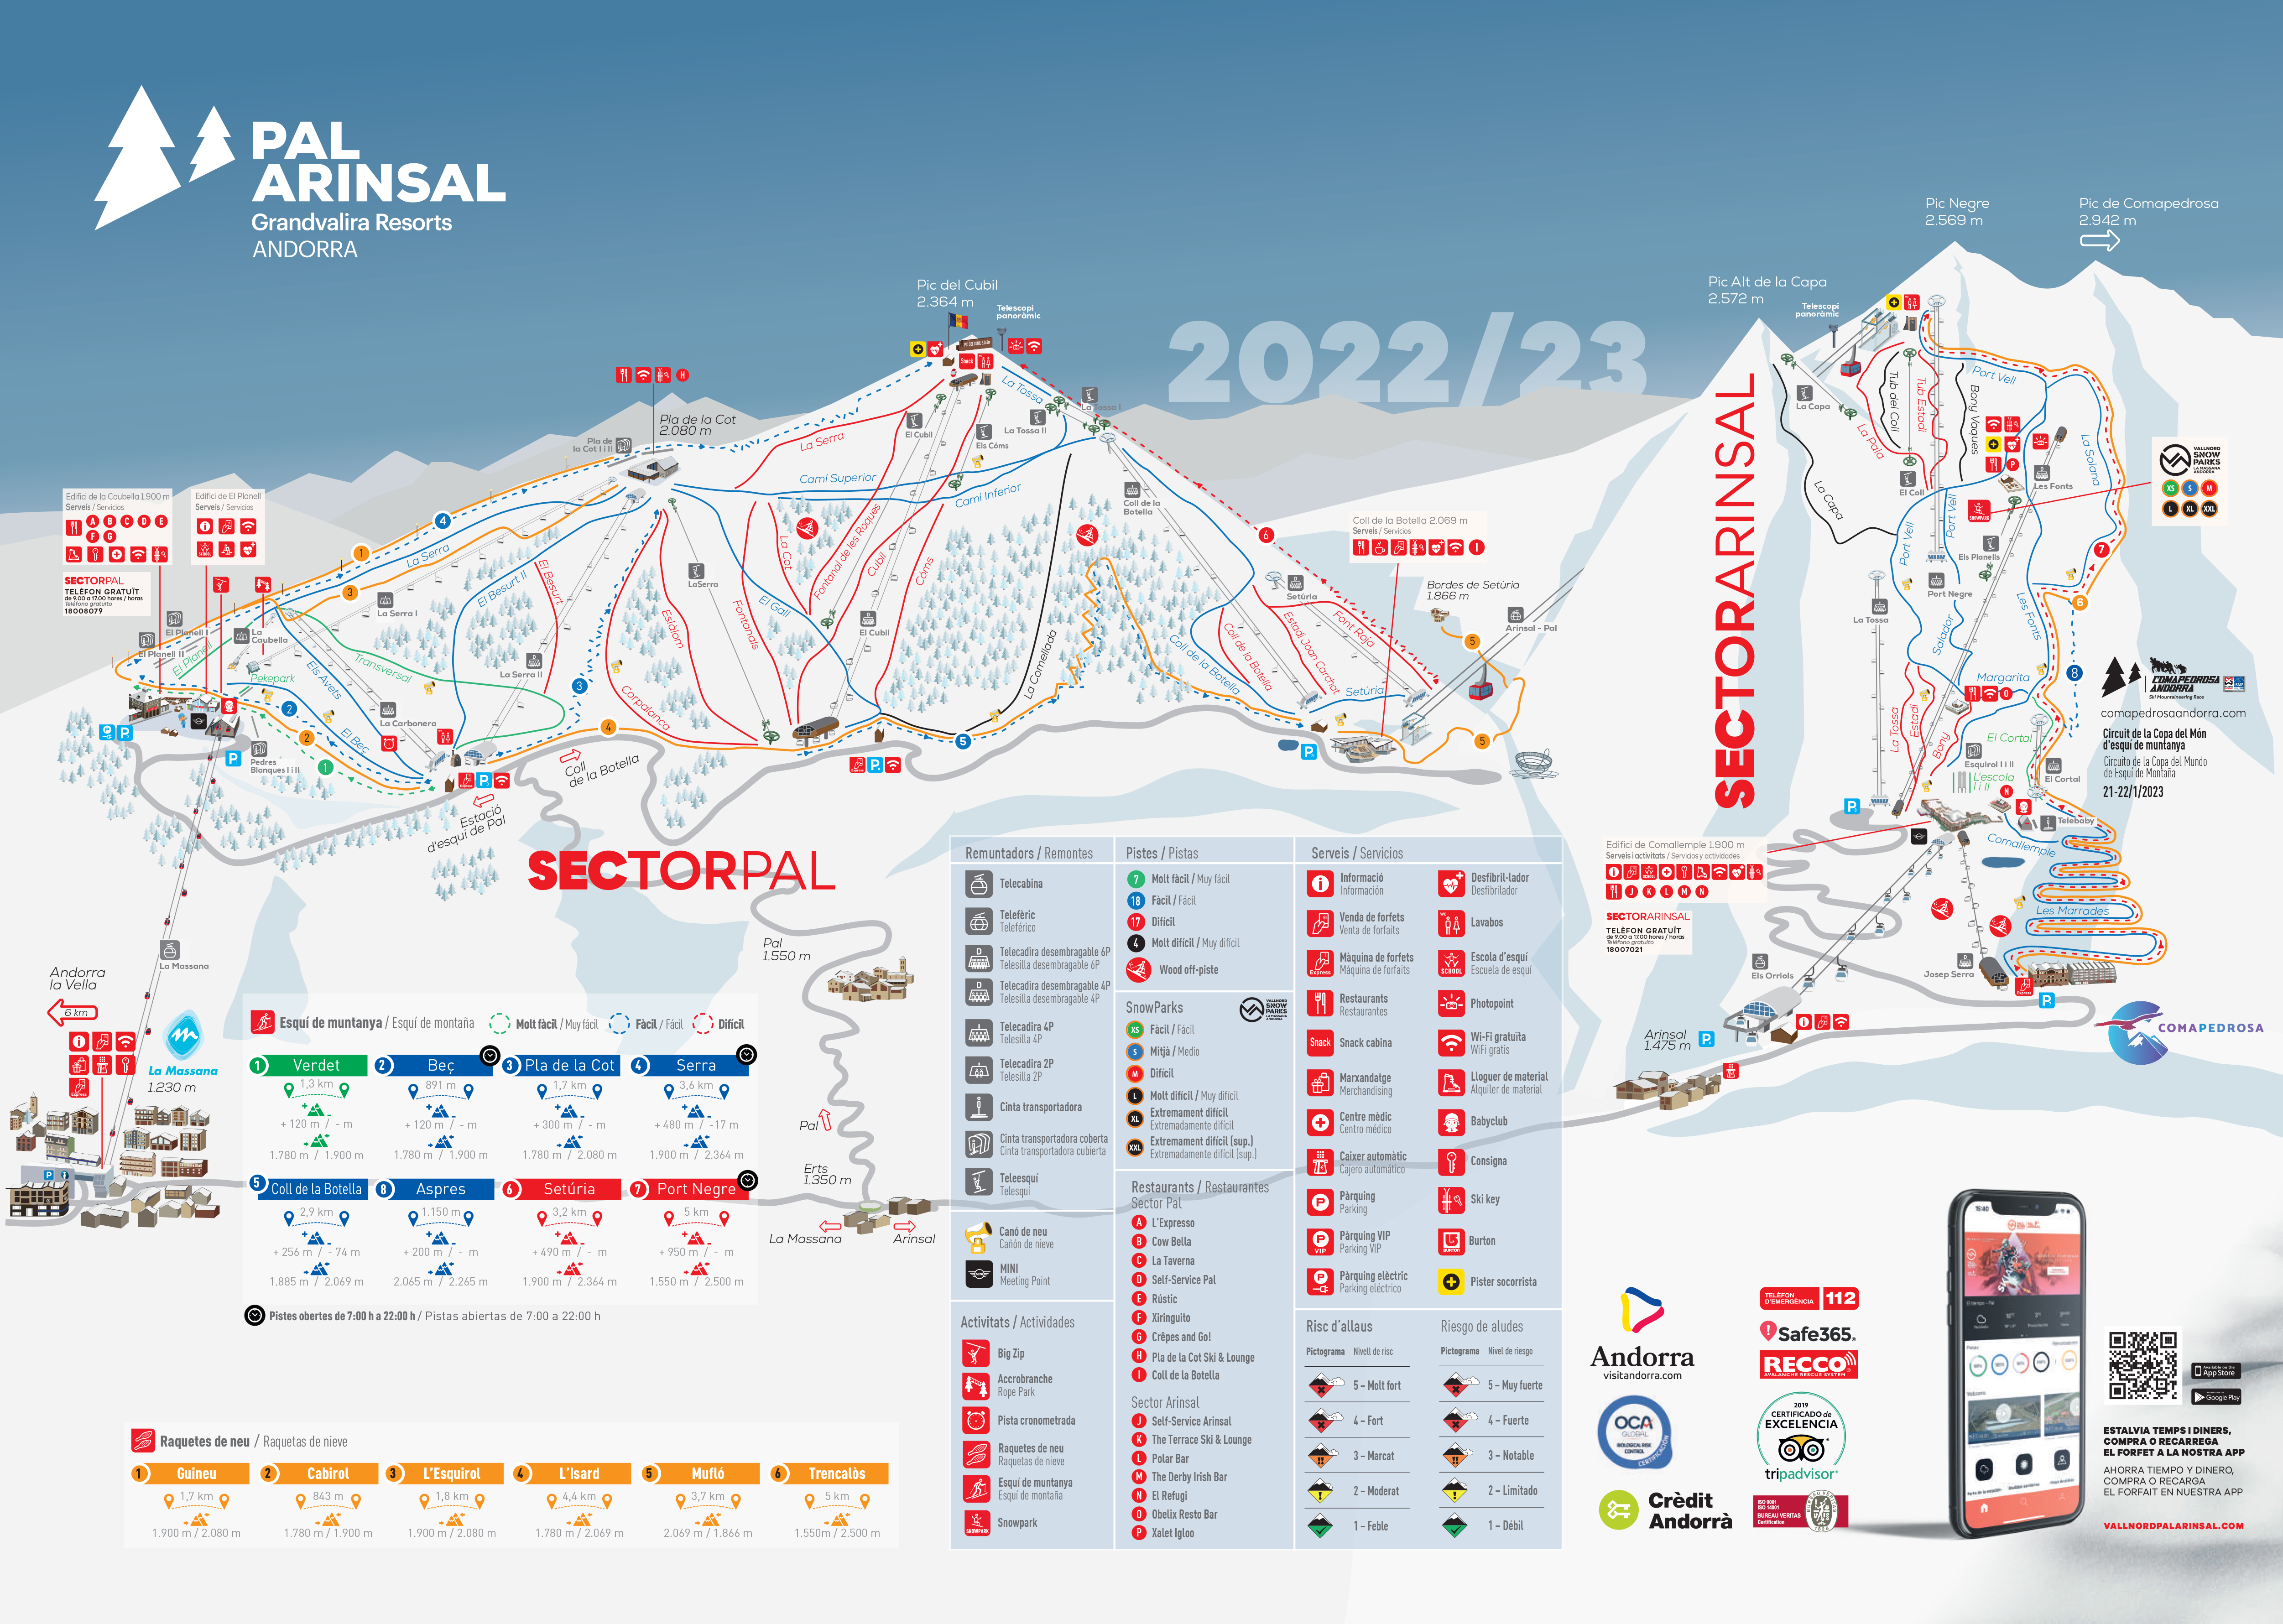 Pal Arinsal Ski Resort trail map